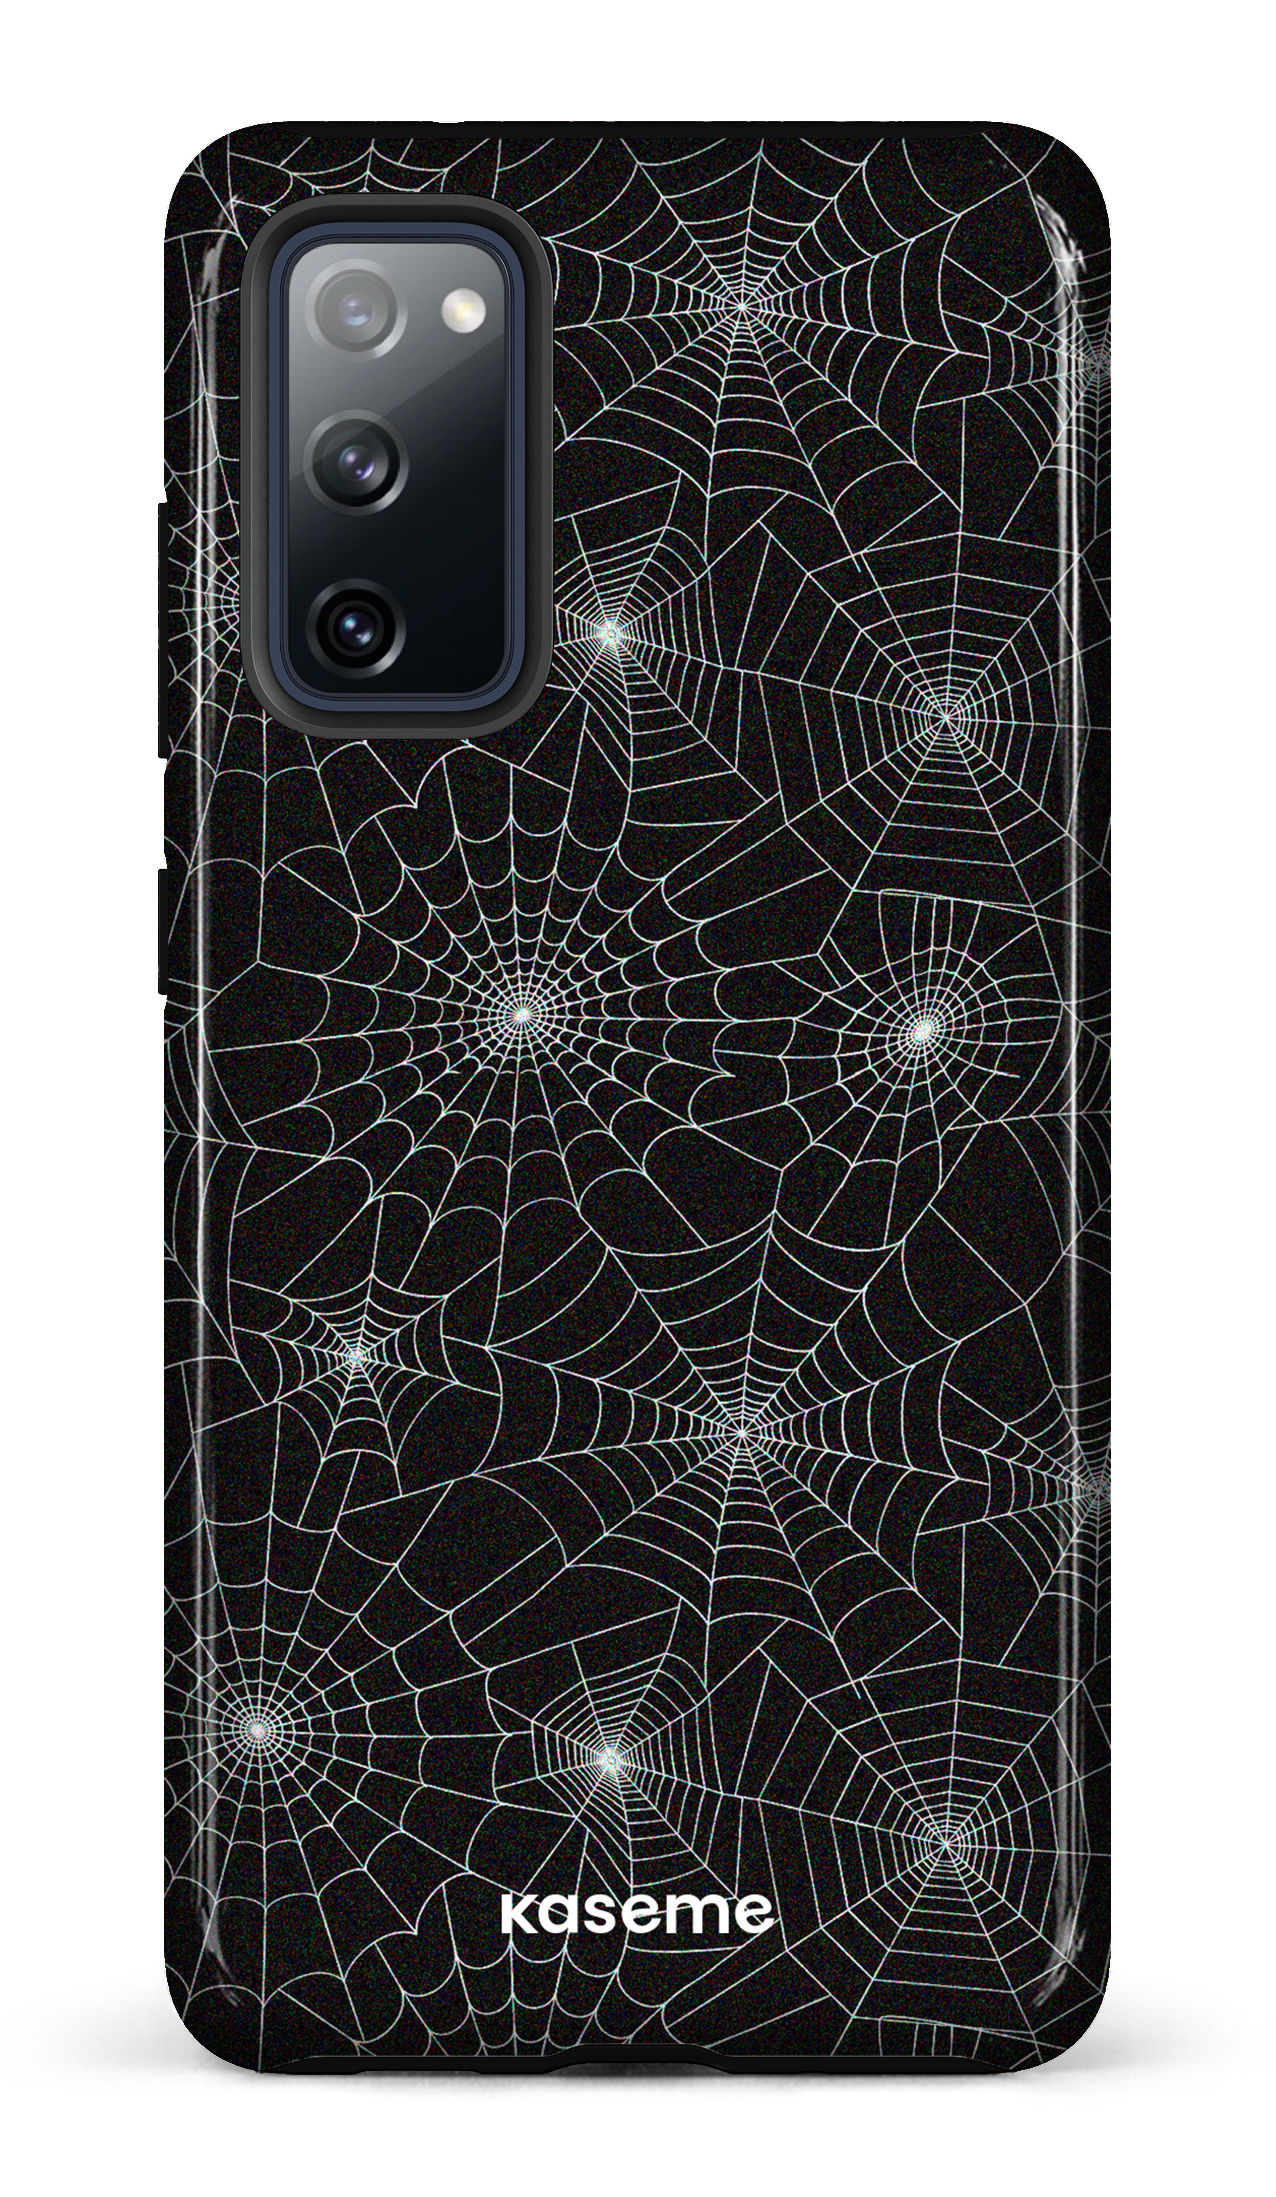 Spider - Galaxy S20 FE